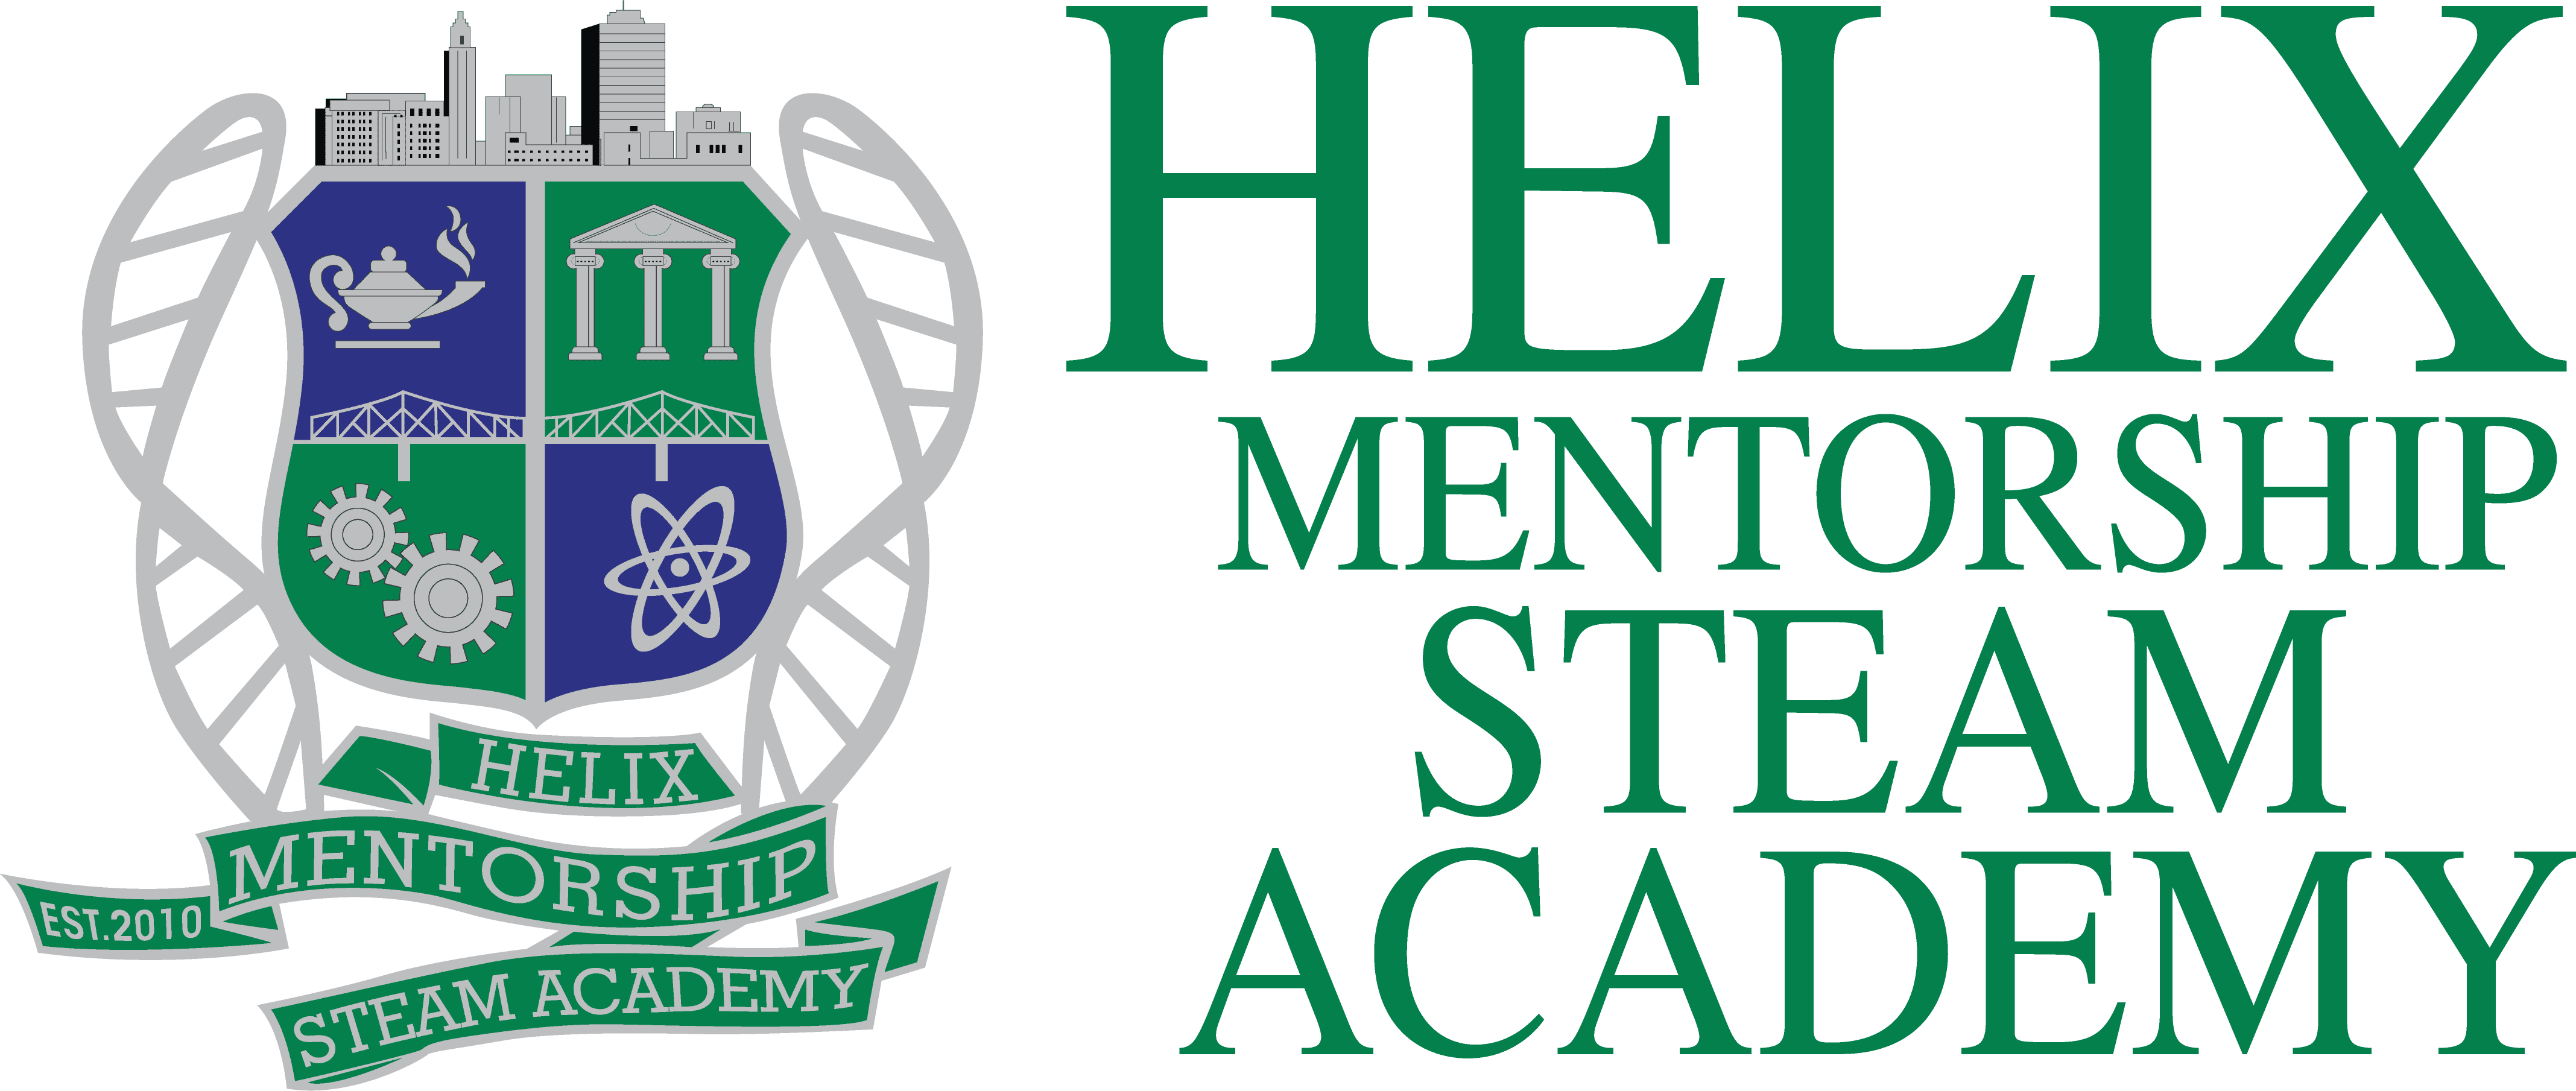 Helix Mentorship STEAM Academy